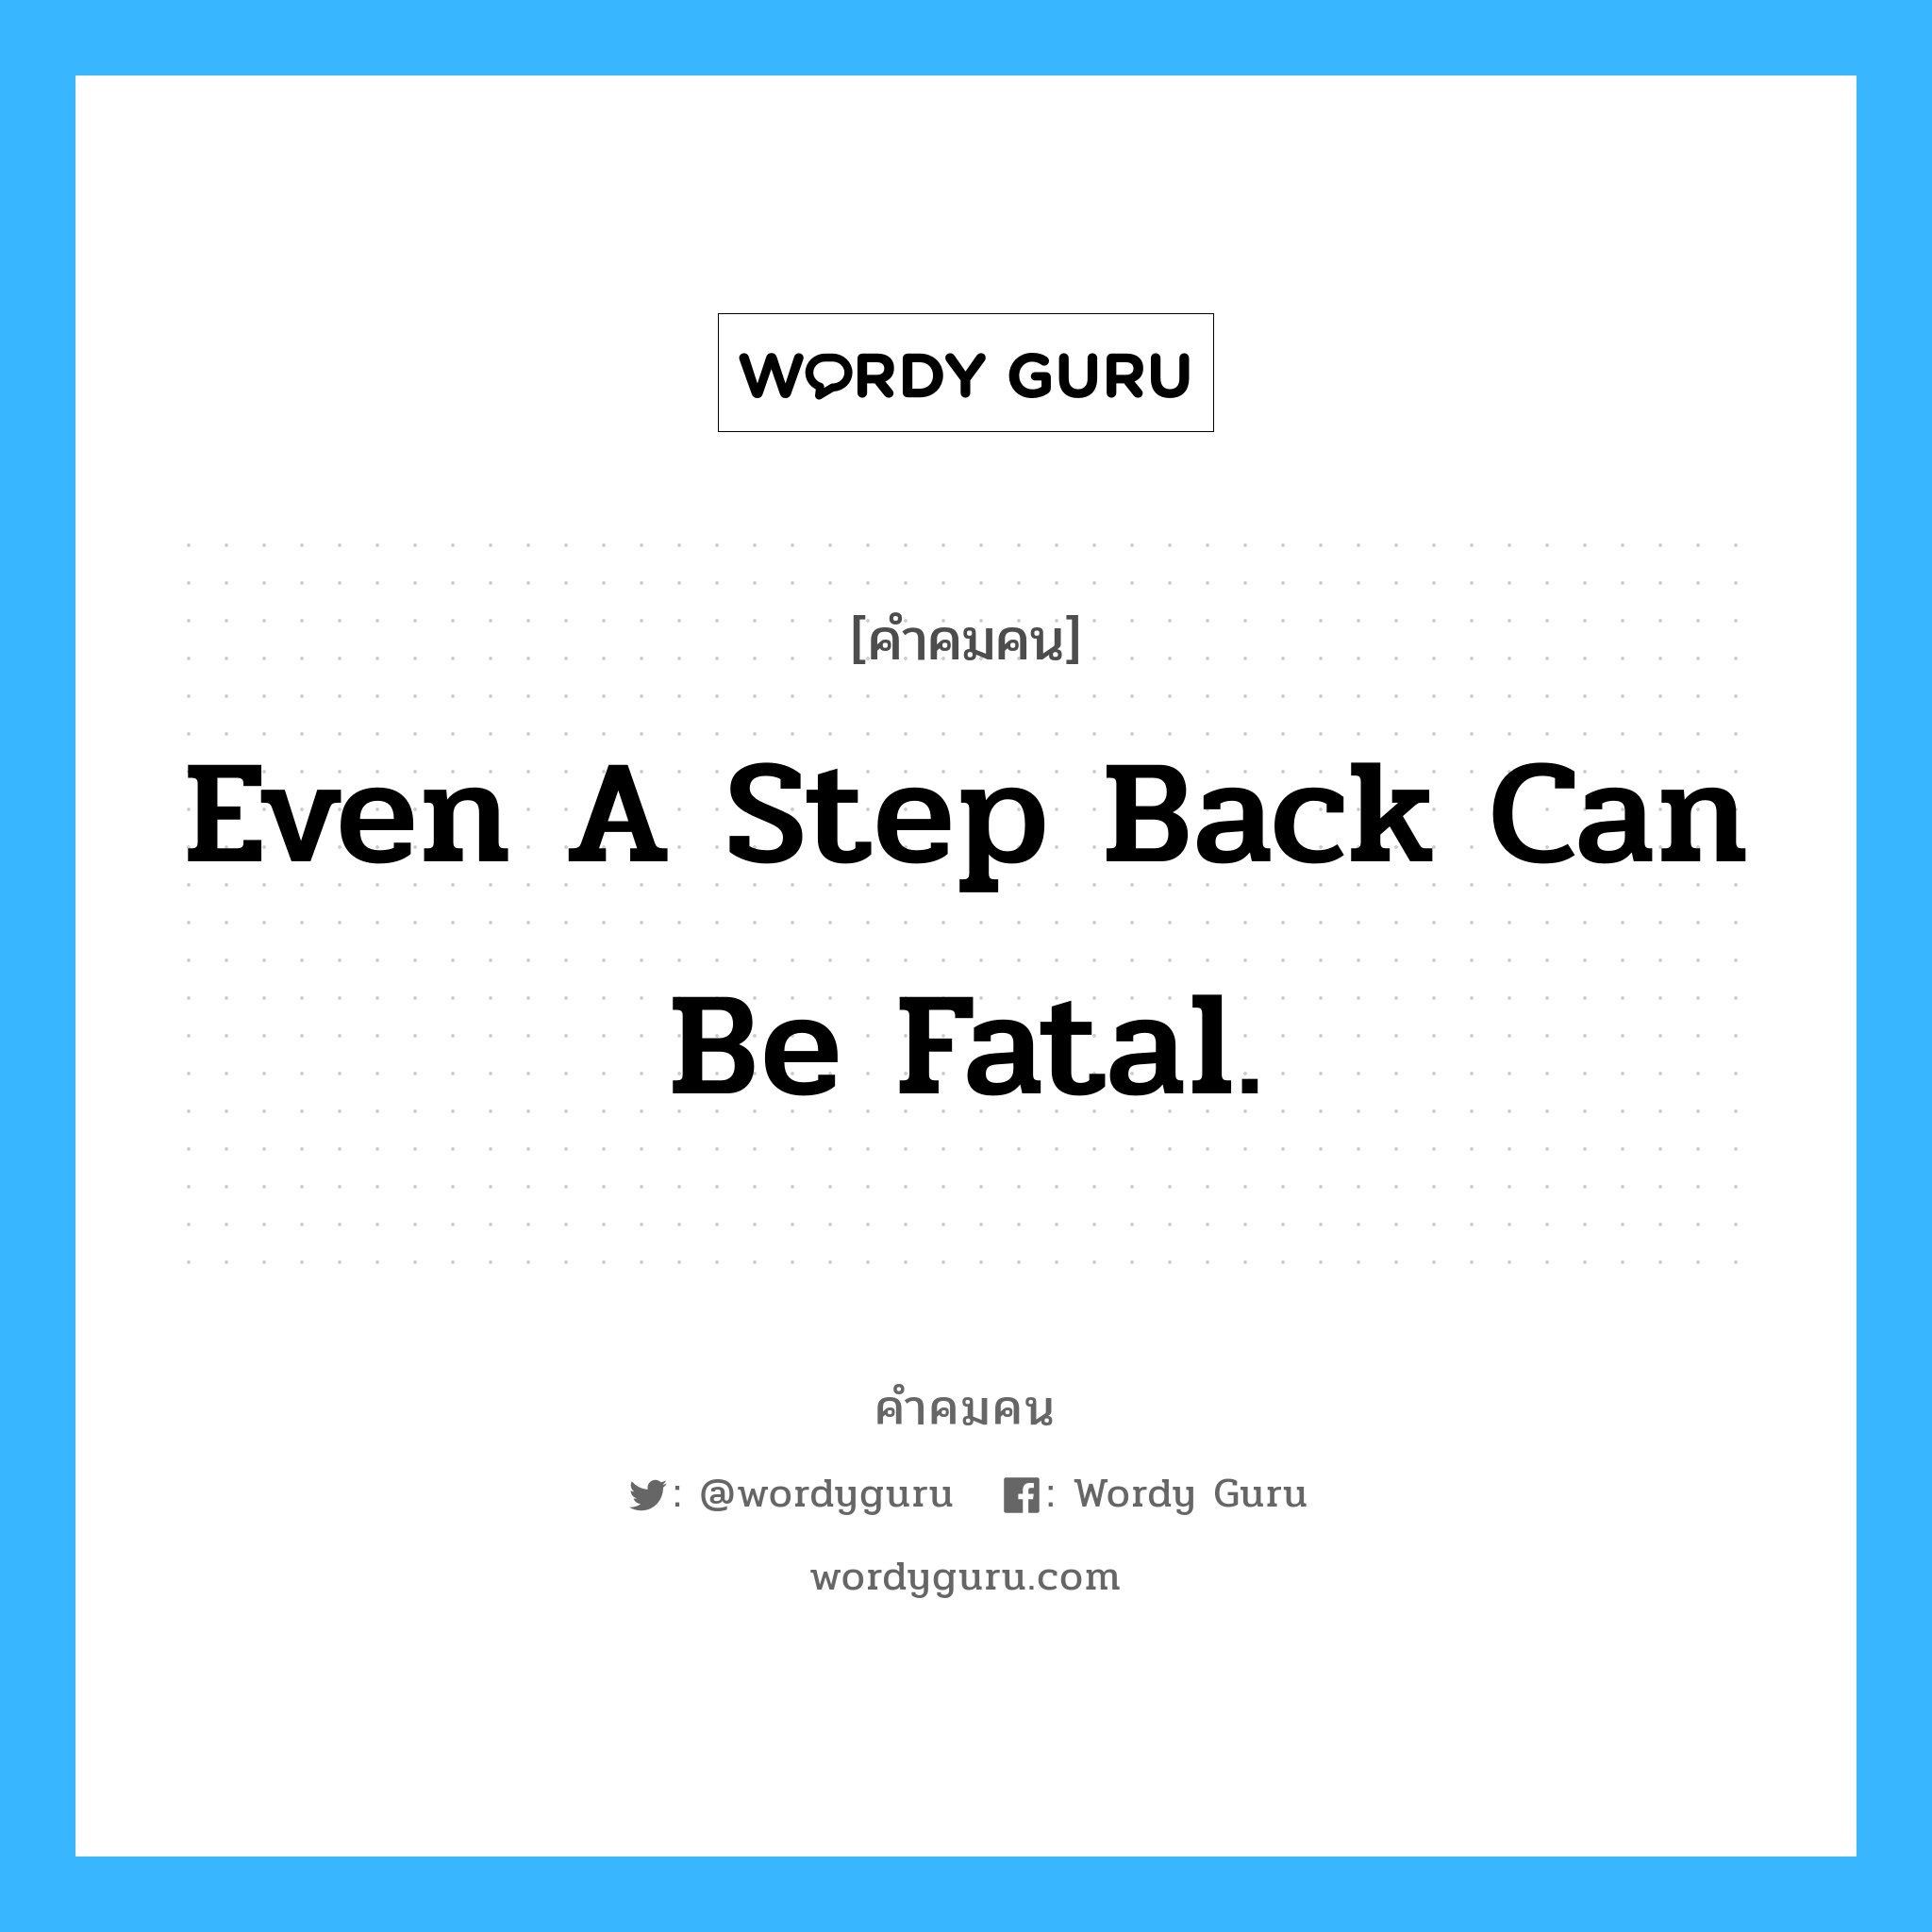 Even a Step back can be fatal., คำคมคน Even a Step back can be fatal. แม้แต่การก้าวถอยหลังก็อาจถึงแก่ชีวิตได้ W.Brudzinski หมวด W.Brudzinski